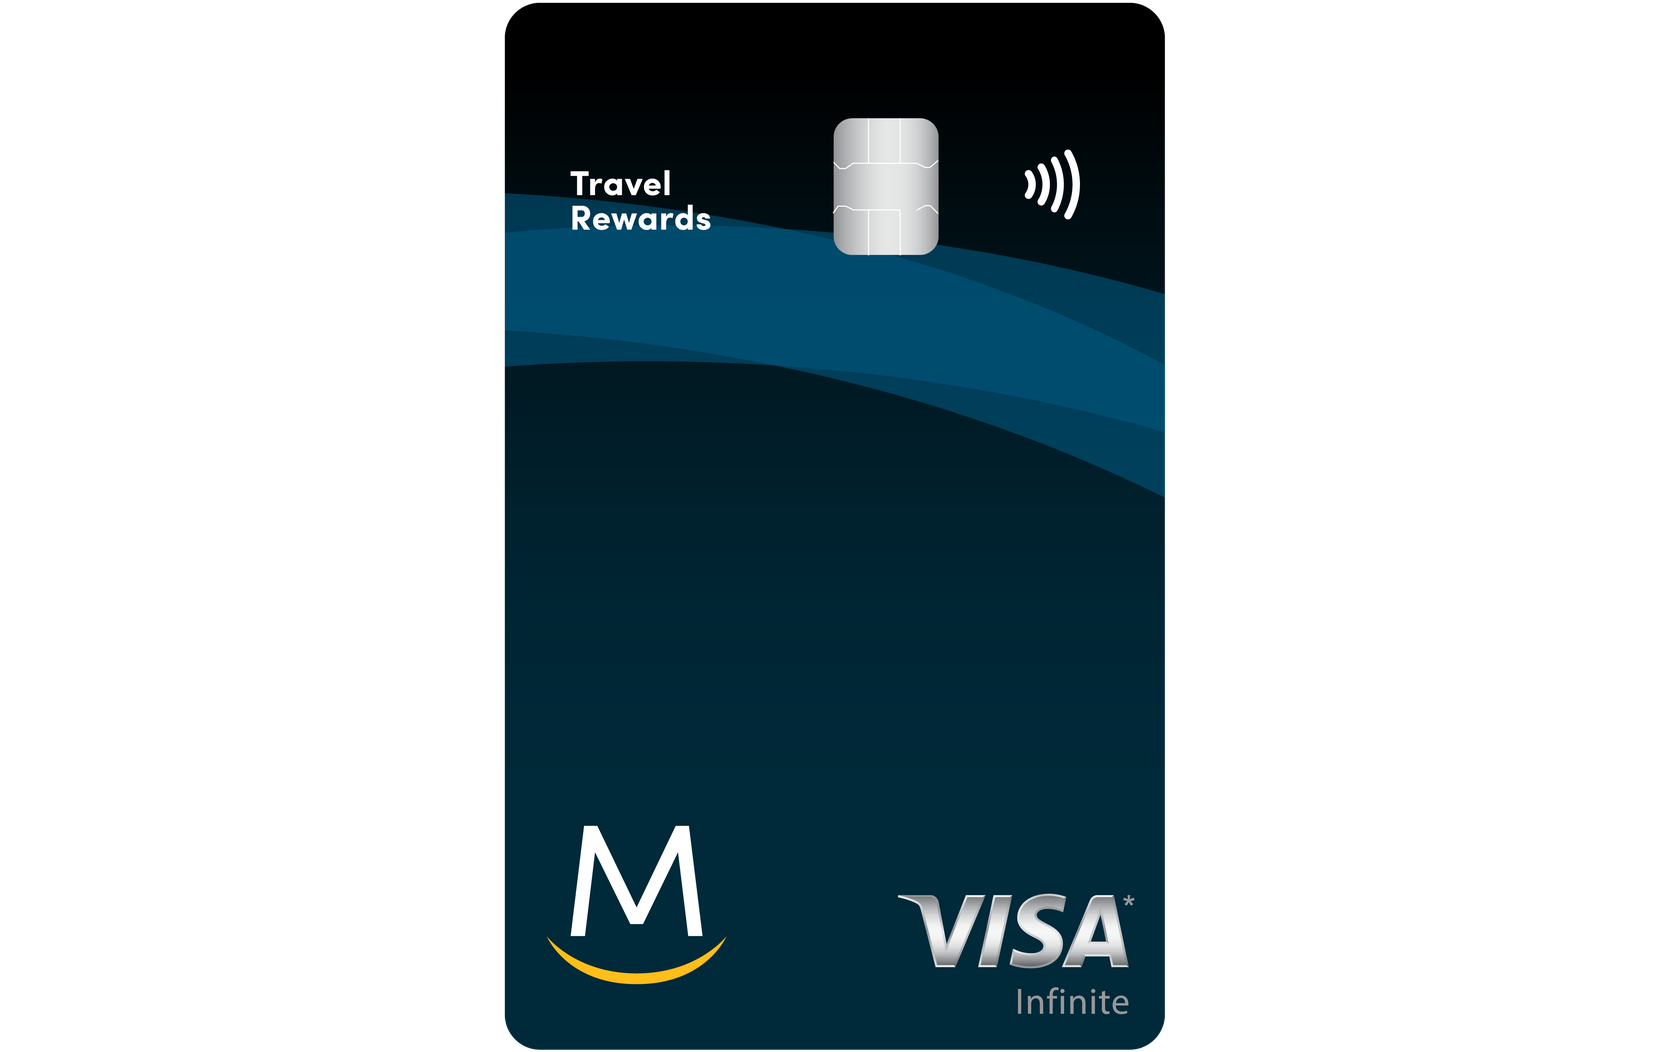 Meridian Visa Infinite Travel Rewards Card